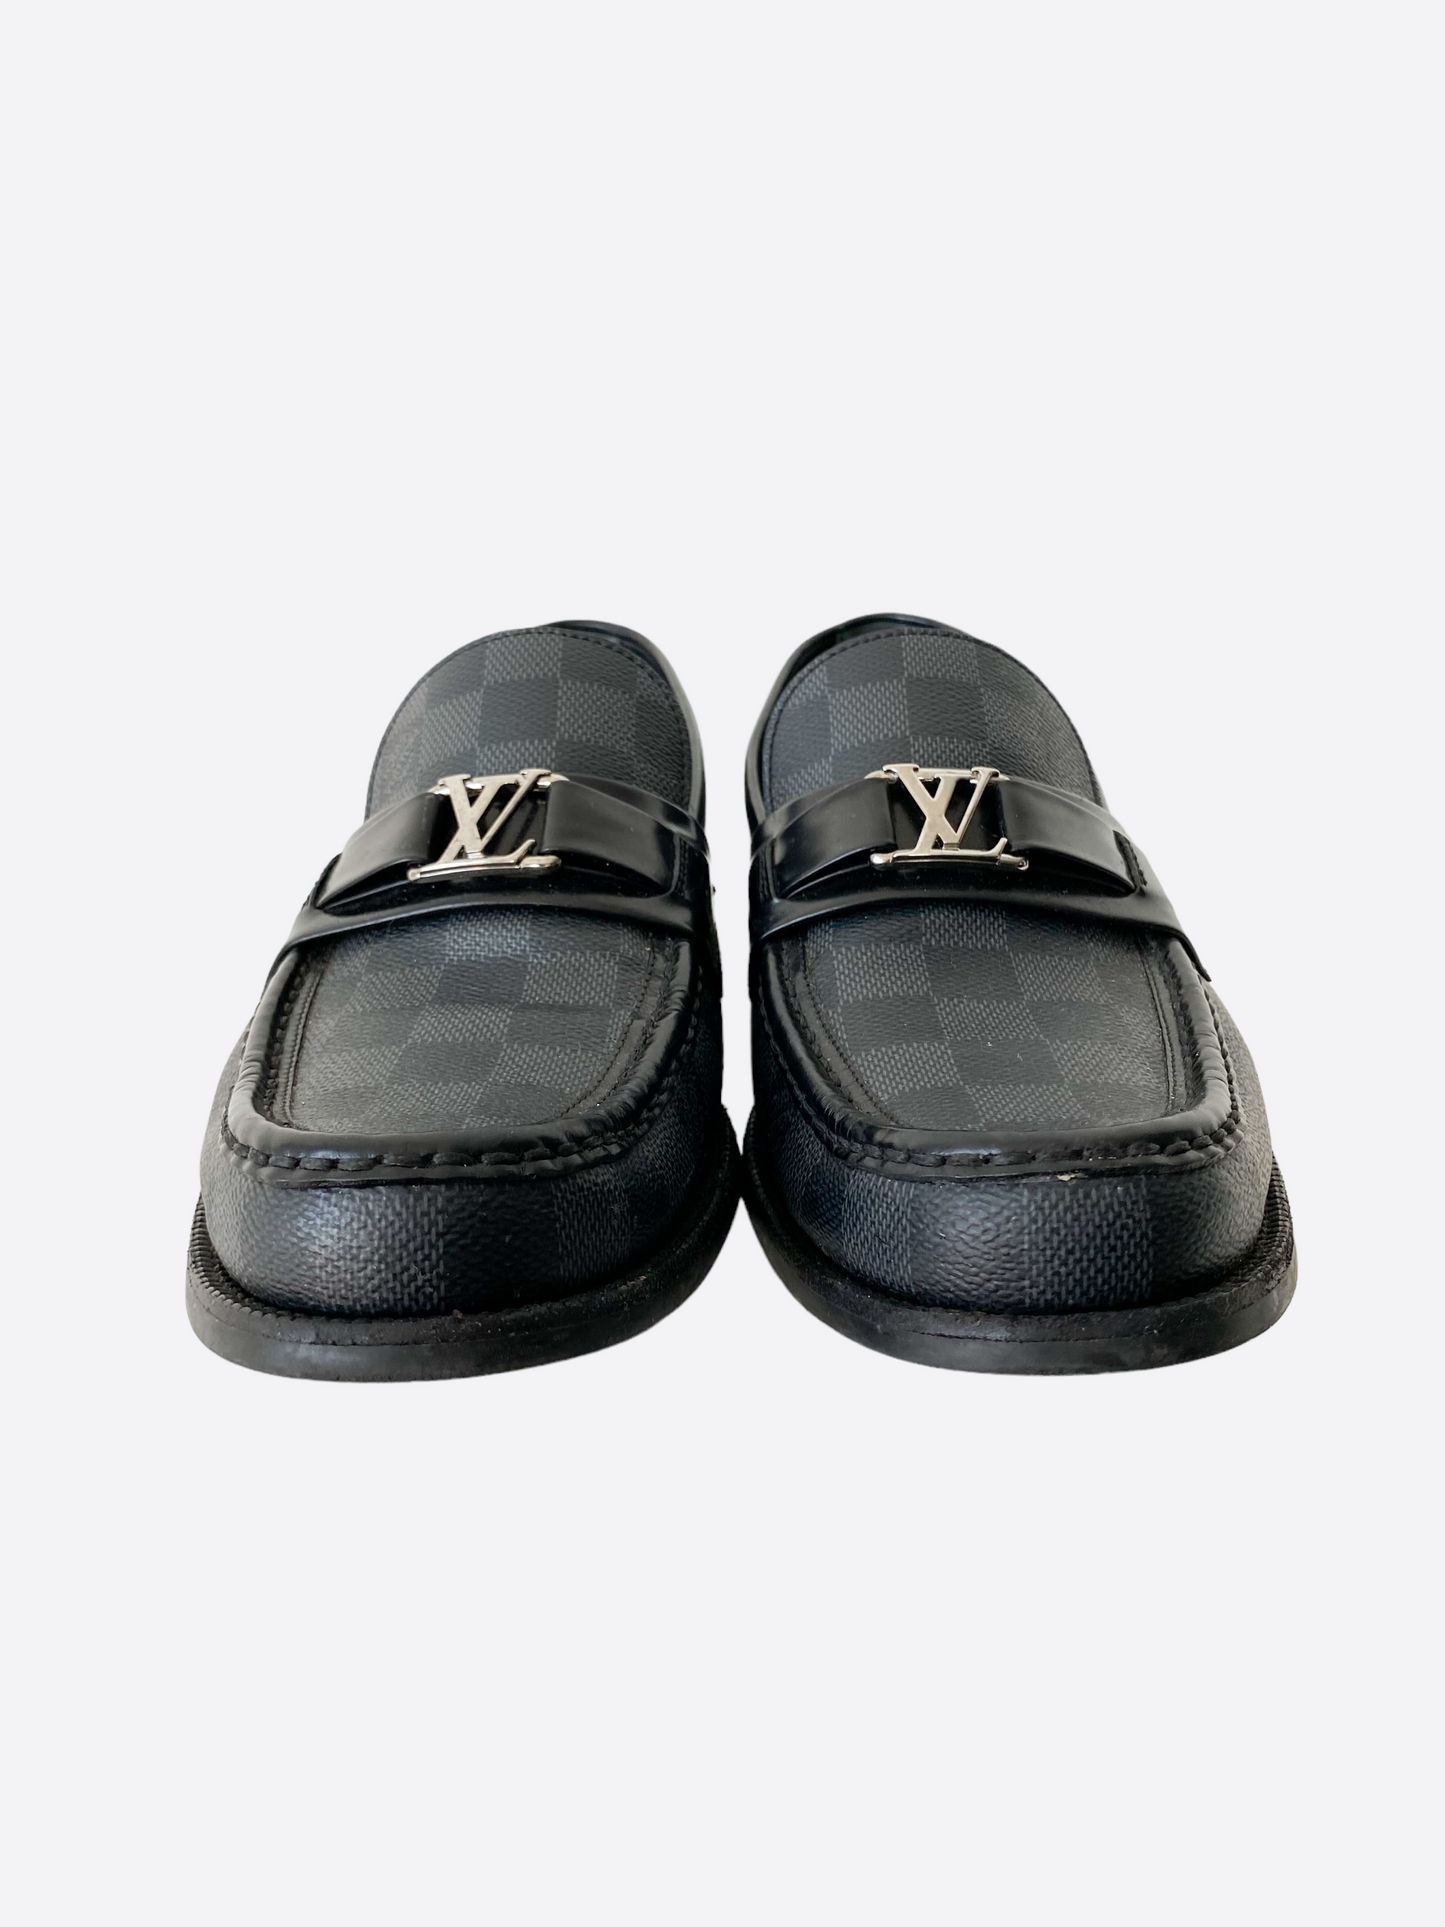 Replica Louis Vuitton Men's Loafers for Sale